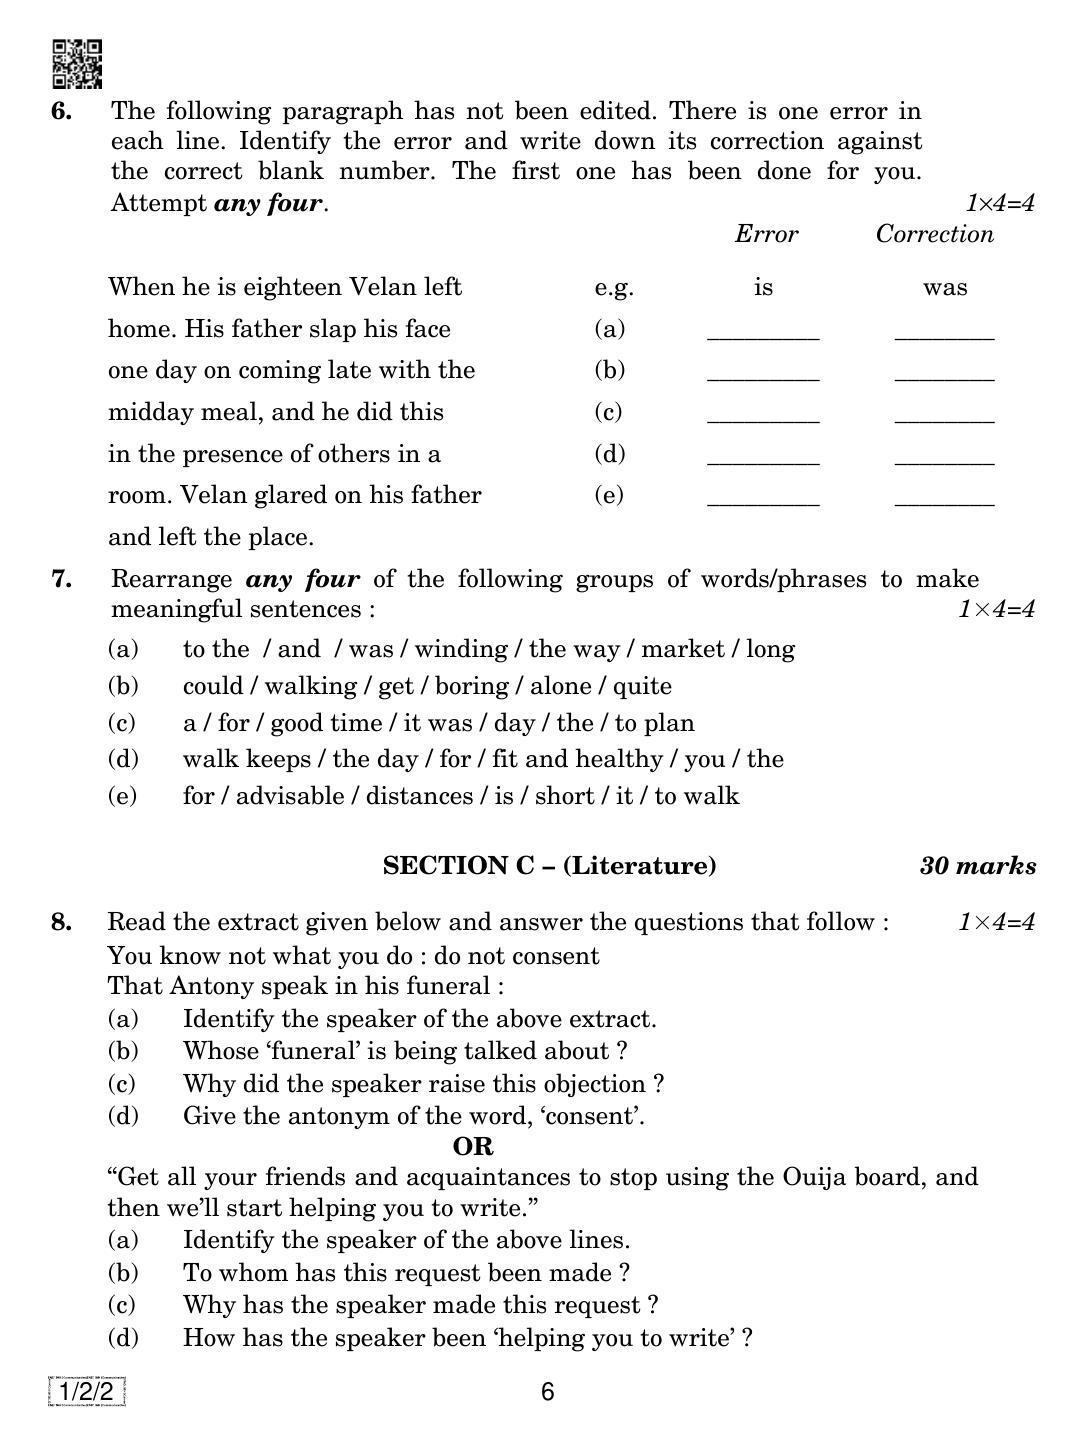 CBSE Class 10 1-2-2 ENGLISH COMMUNICATIVE 2019 Question Paper - Page 6